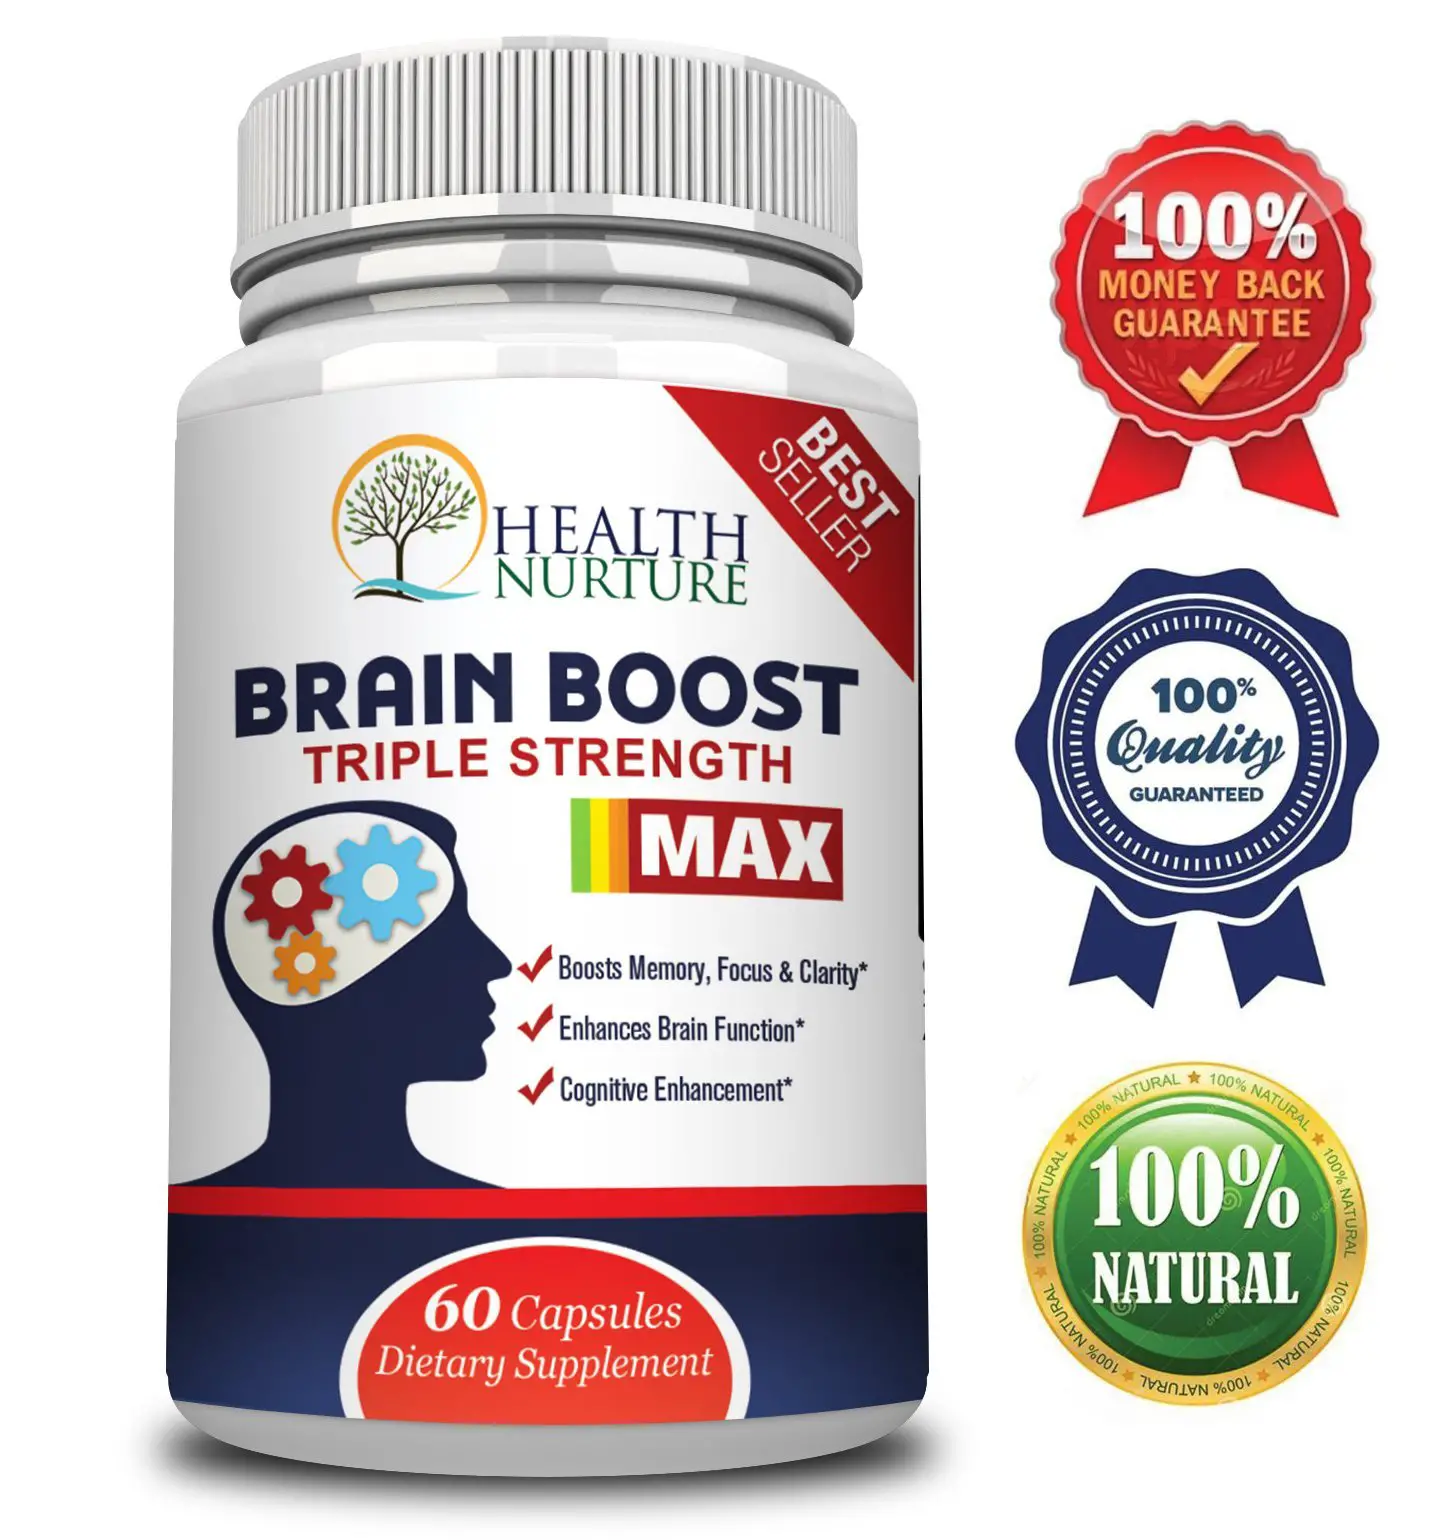 Brain цены. Brain Boost. Boost your Brain витамины. Брейн Макс препарат. Брейн Макс аналоги.